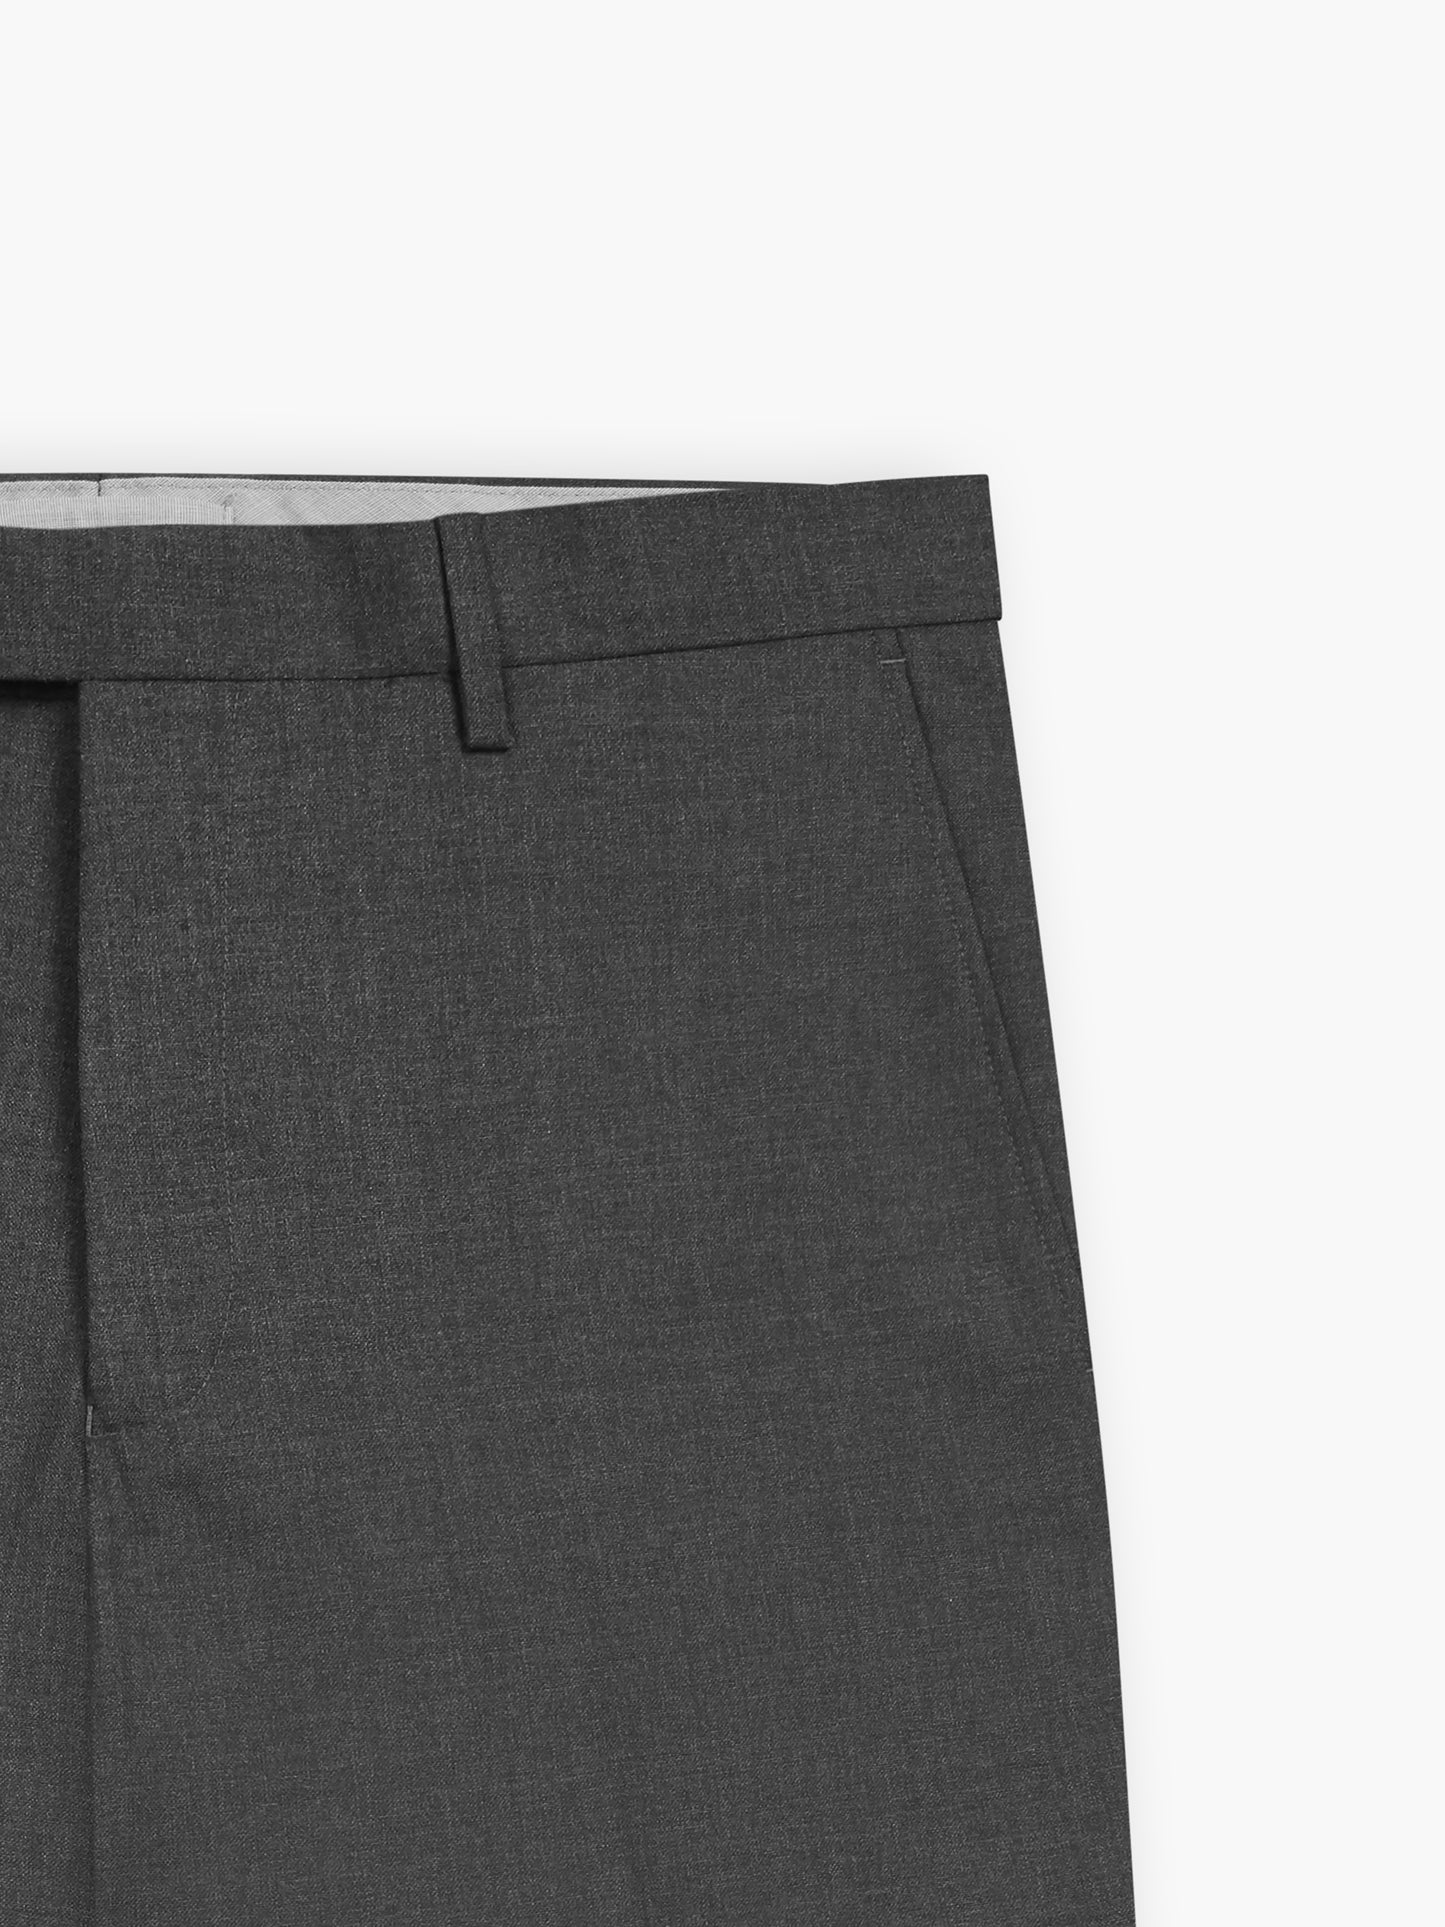 Barbican Barberis Slim Fit Charcoal Trousers